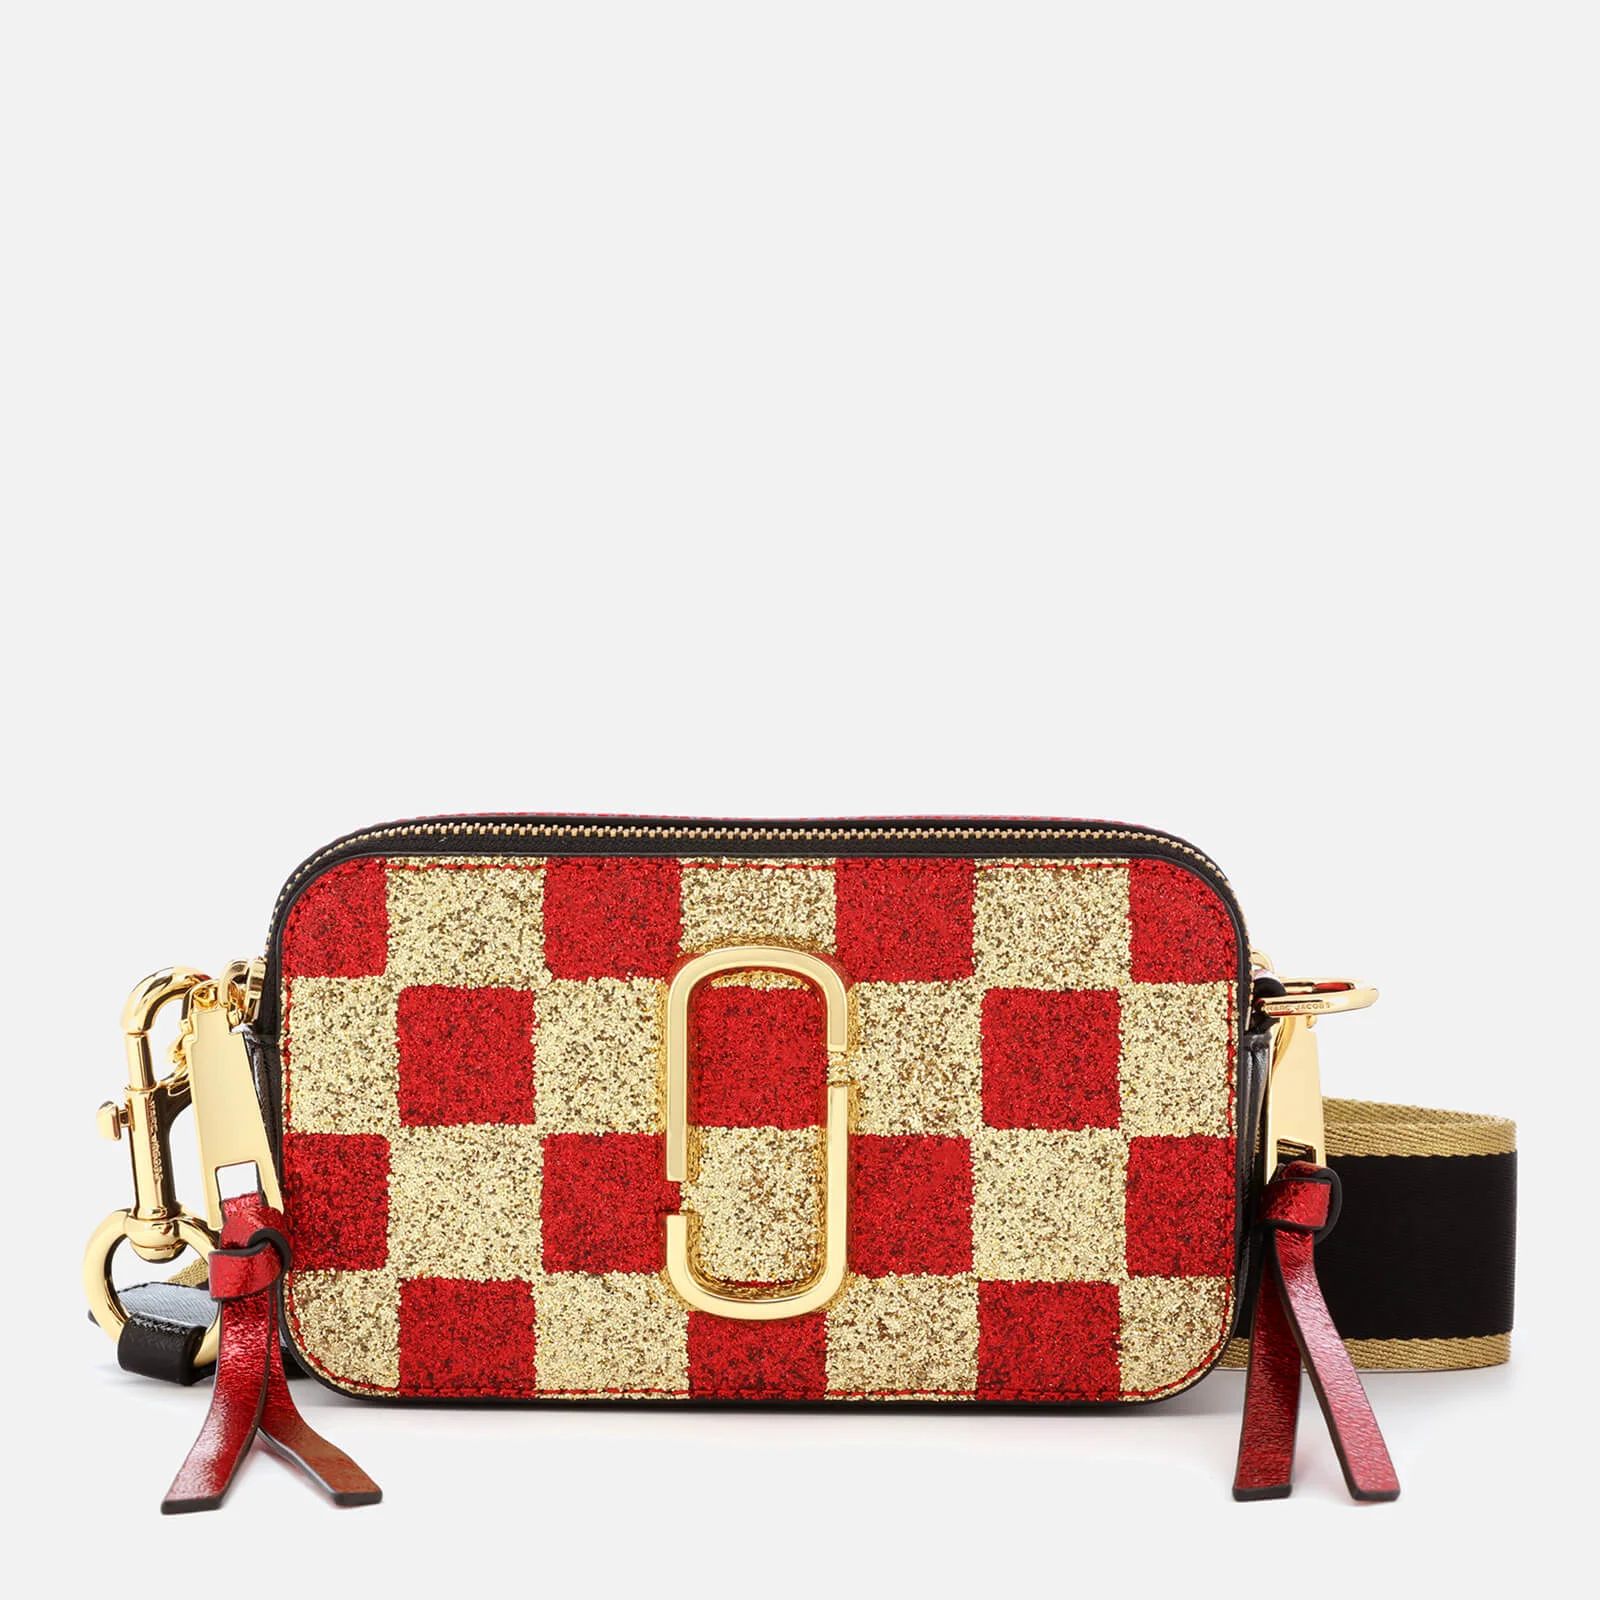 Marc Jacobs Women's Snapshot Checkerboard Bag - Gold Multi Image 1